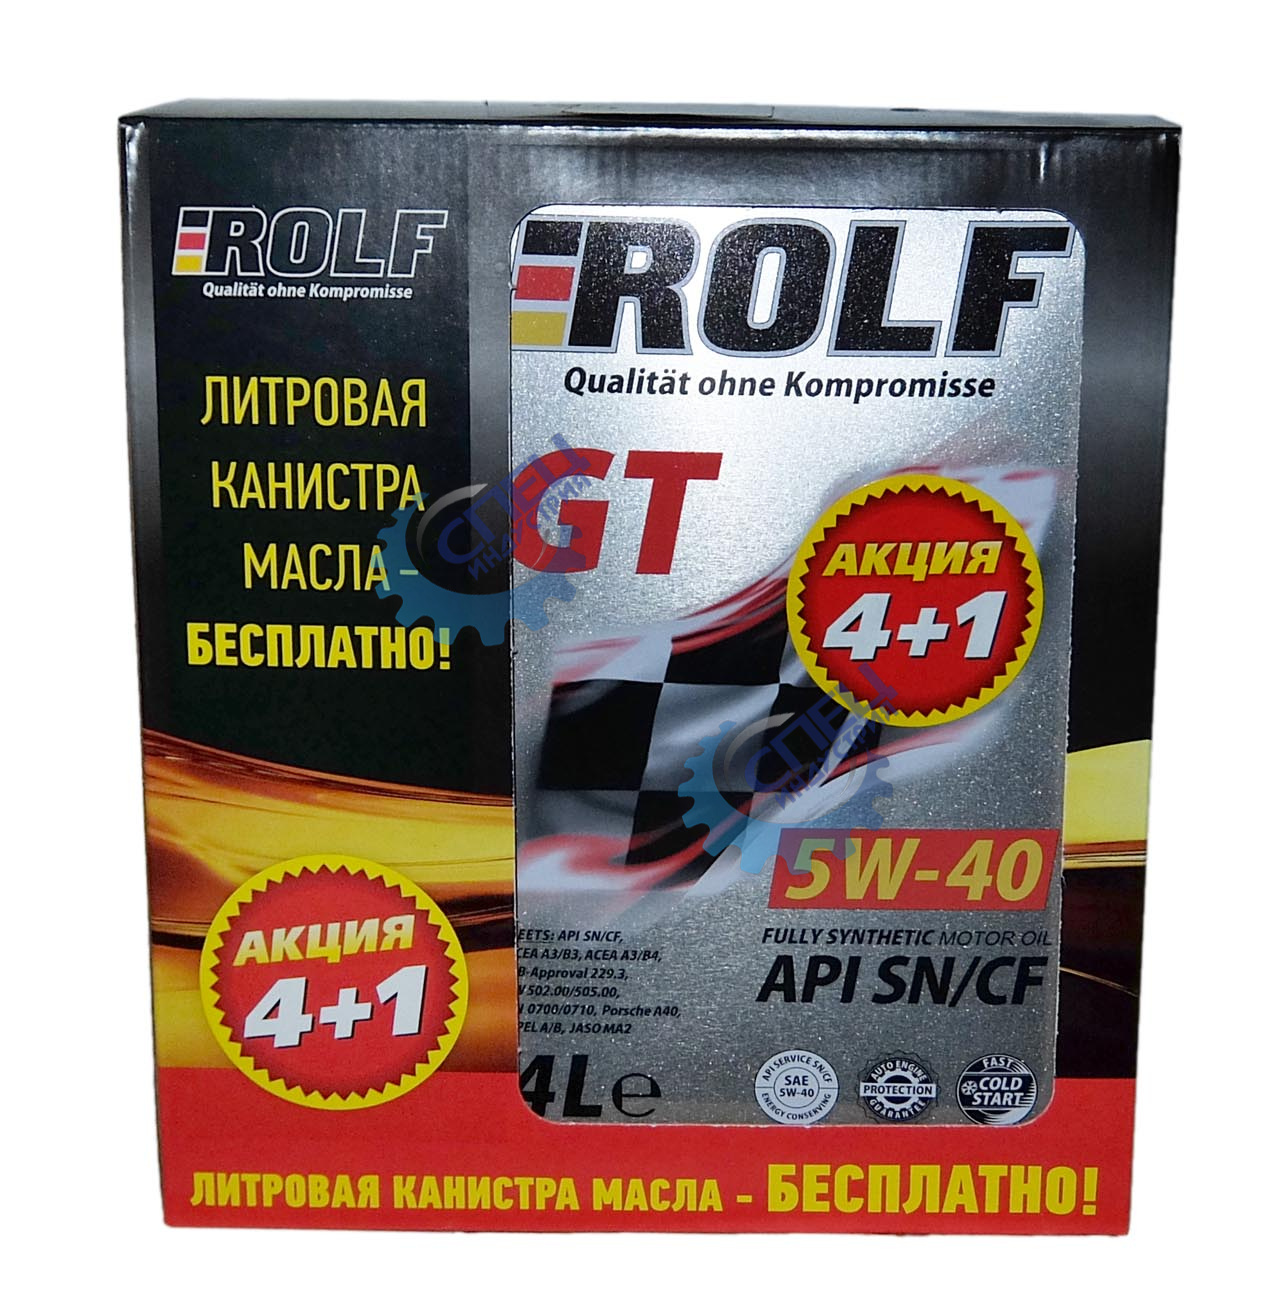 А/масло Rolf GT 5W40 4л акция 4+1